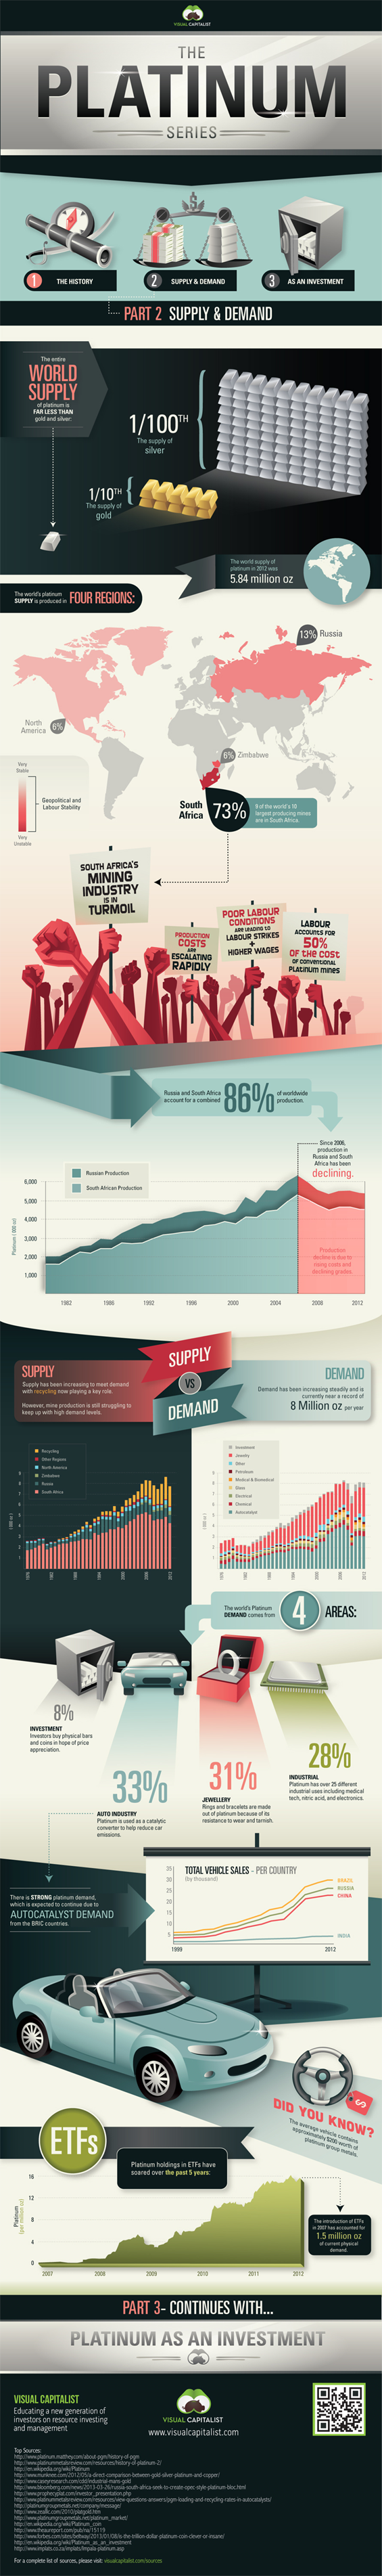 platinum supply demand infographic